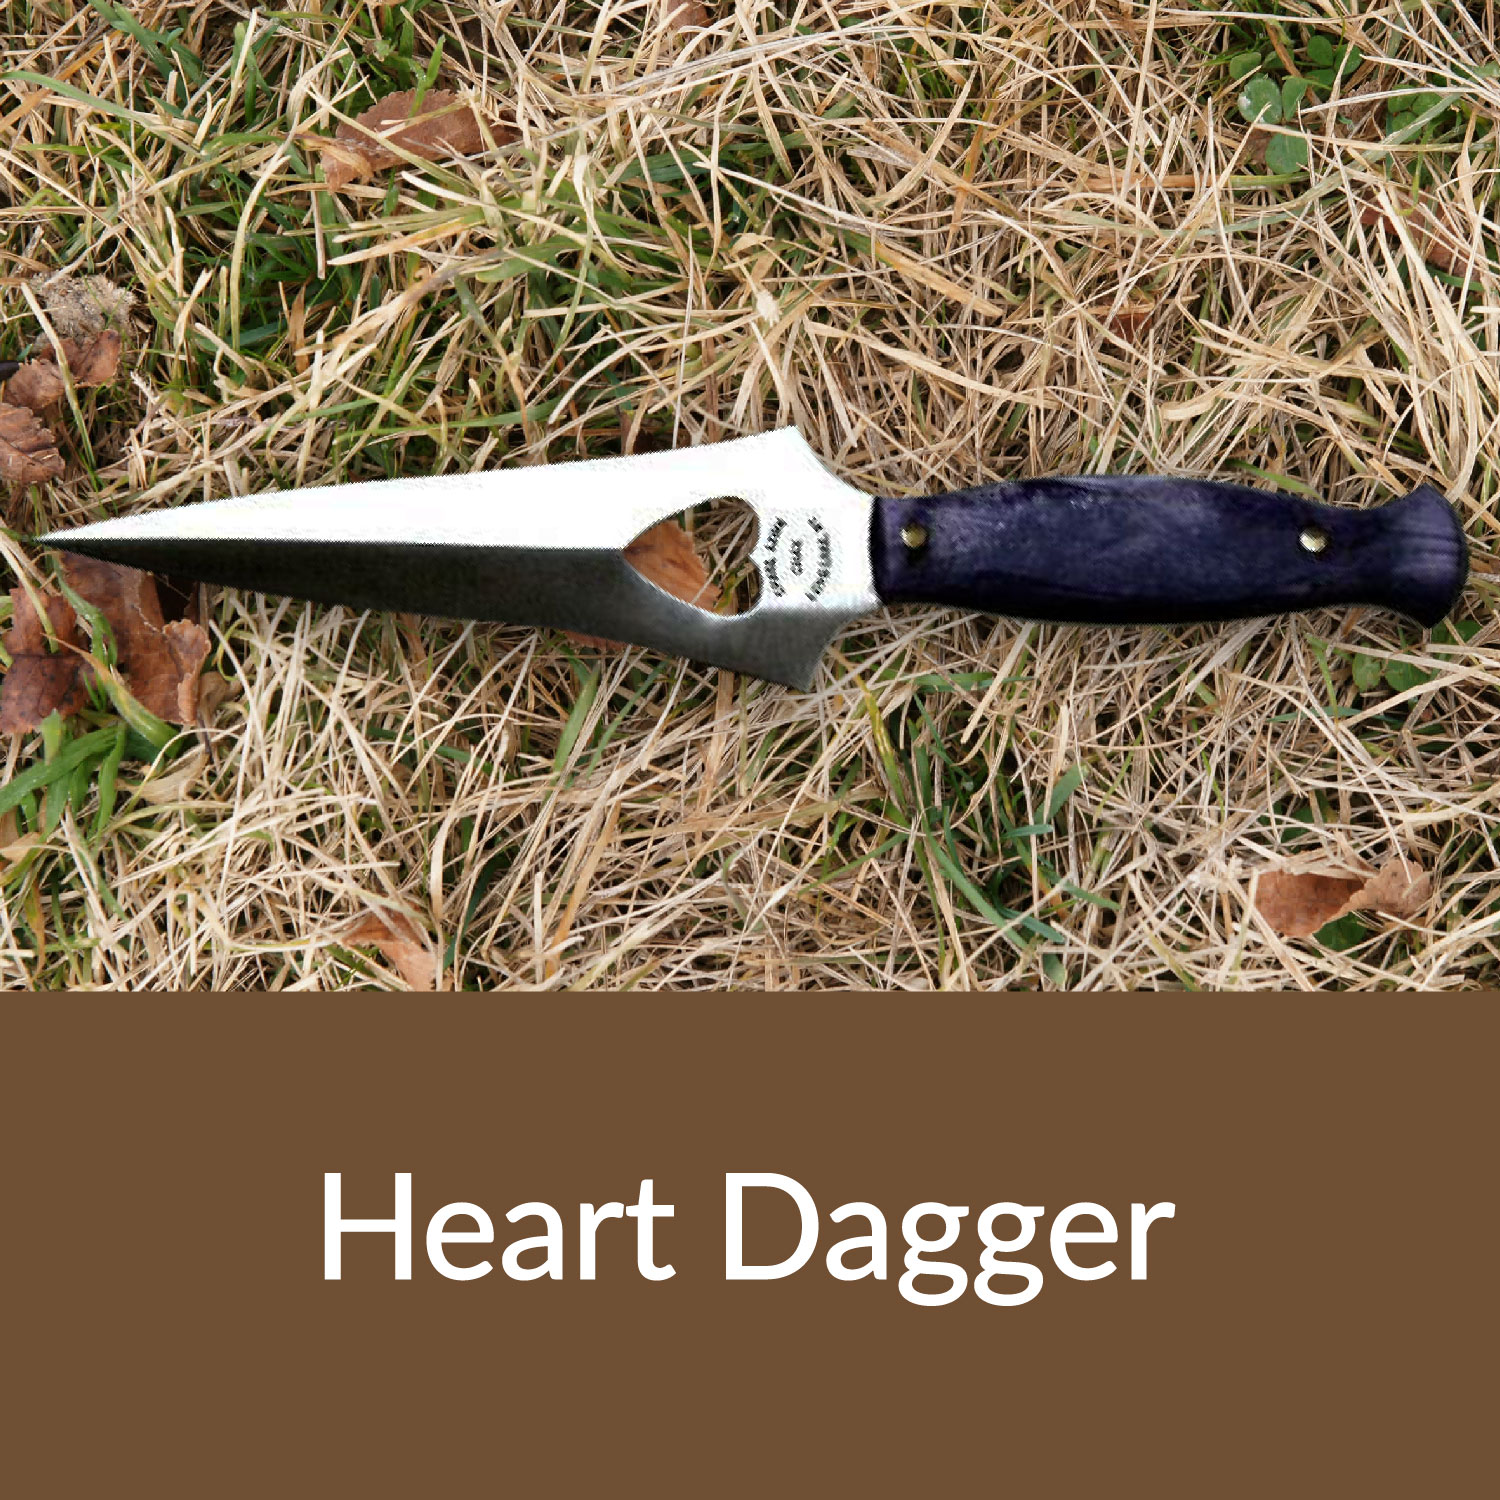 Heart Dagger